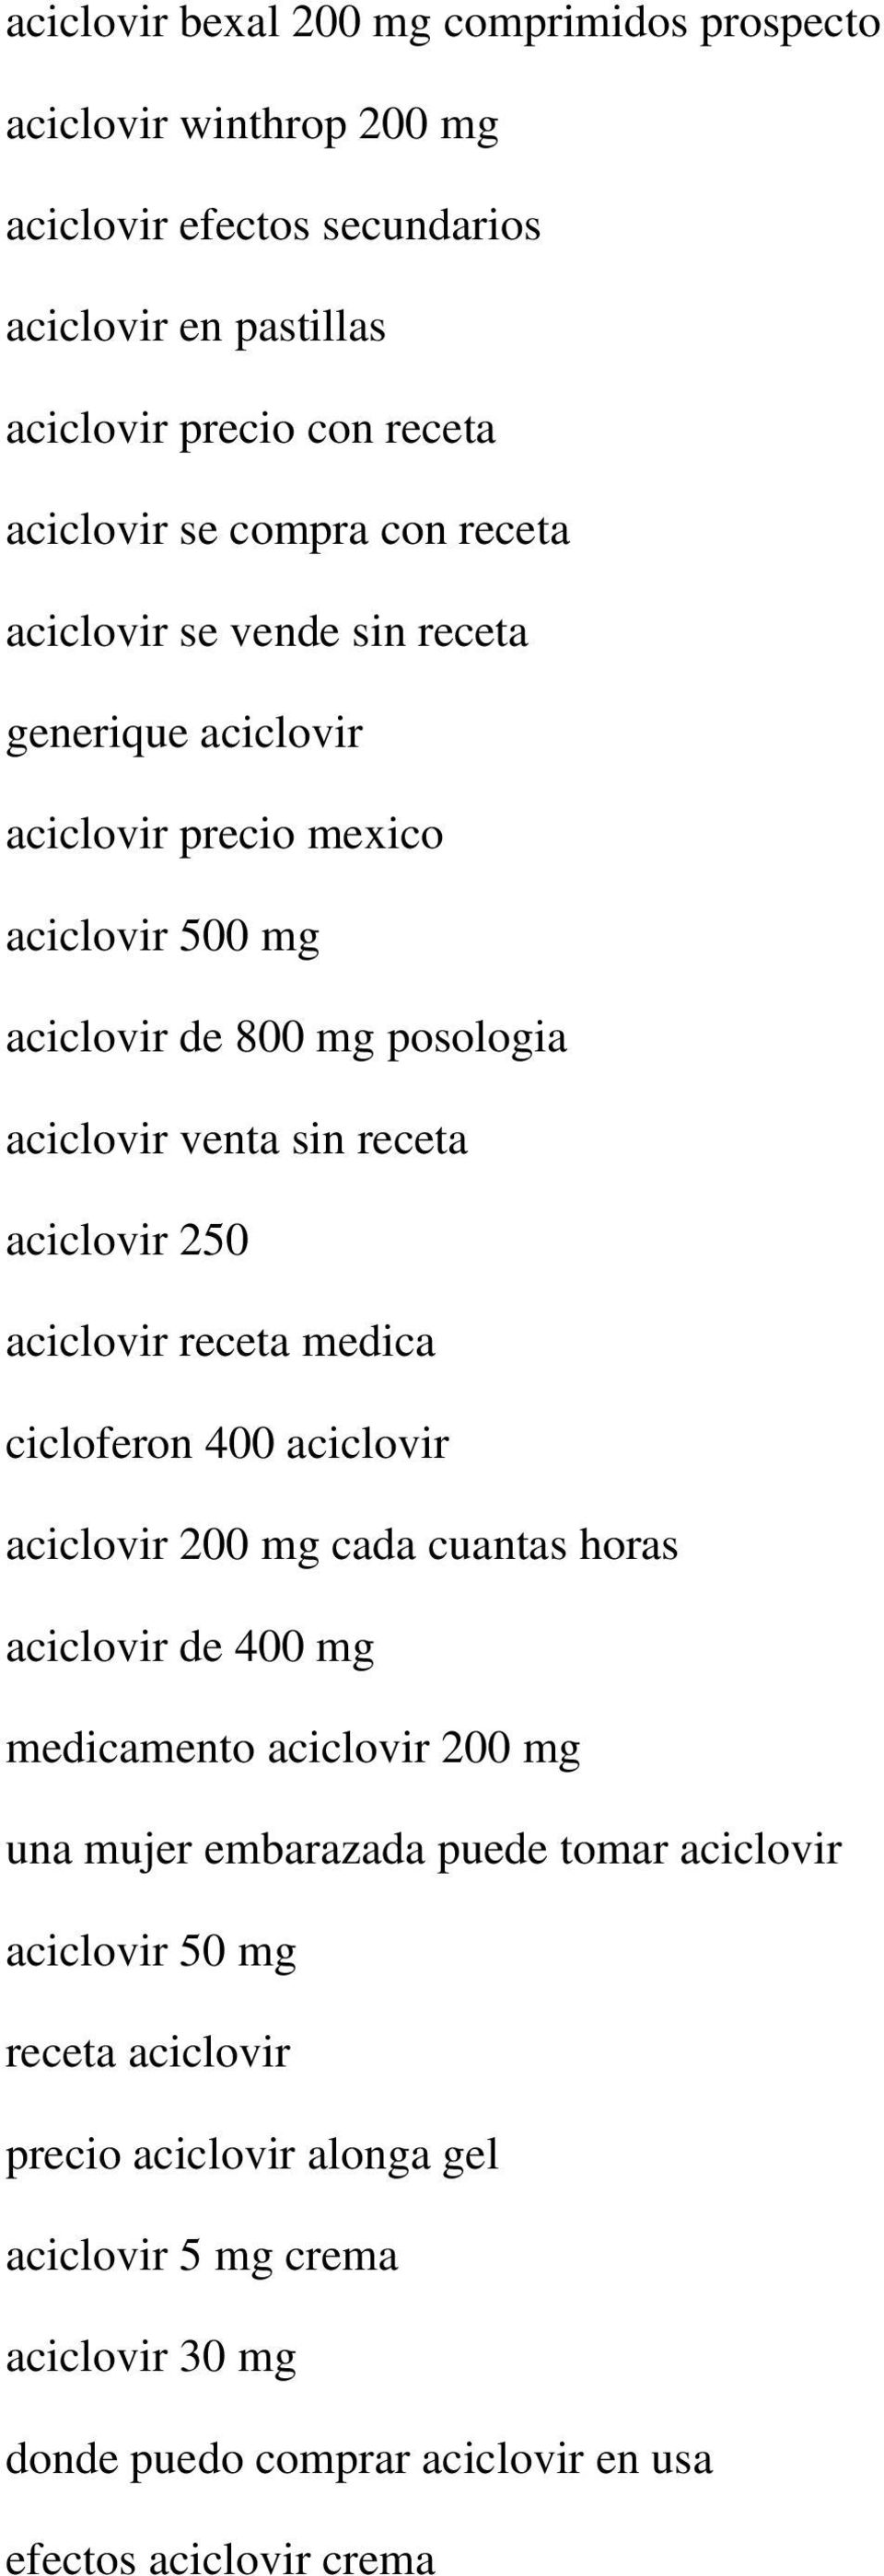 aciclovir 250 aciclovir receta medica cicloferon 400 aciclovir aciclovir 200 mg cada cuantas horas aciclovir de 400 mg medicamento aciclovir 200 mg una mujer embarazada